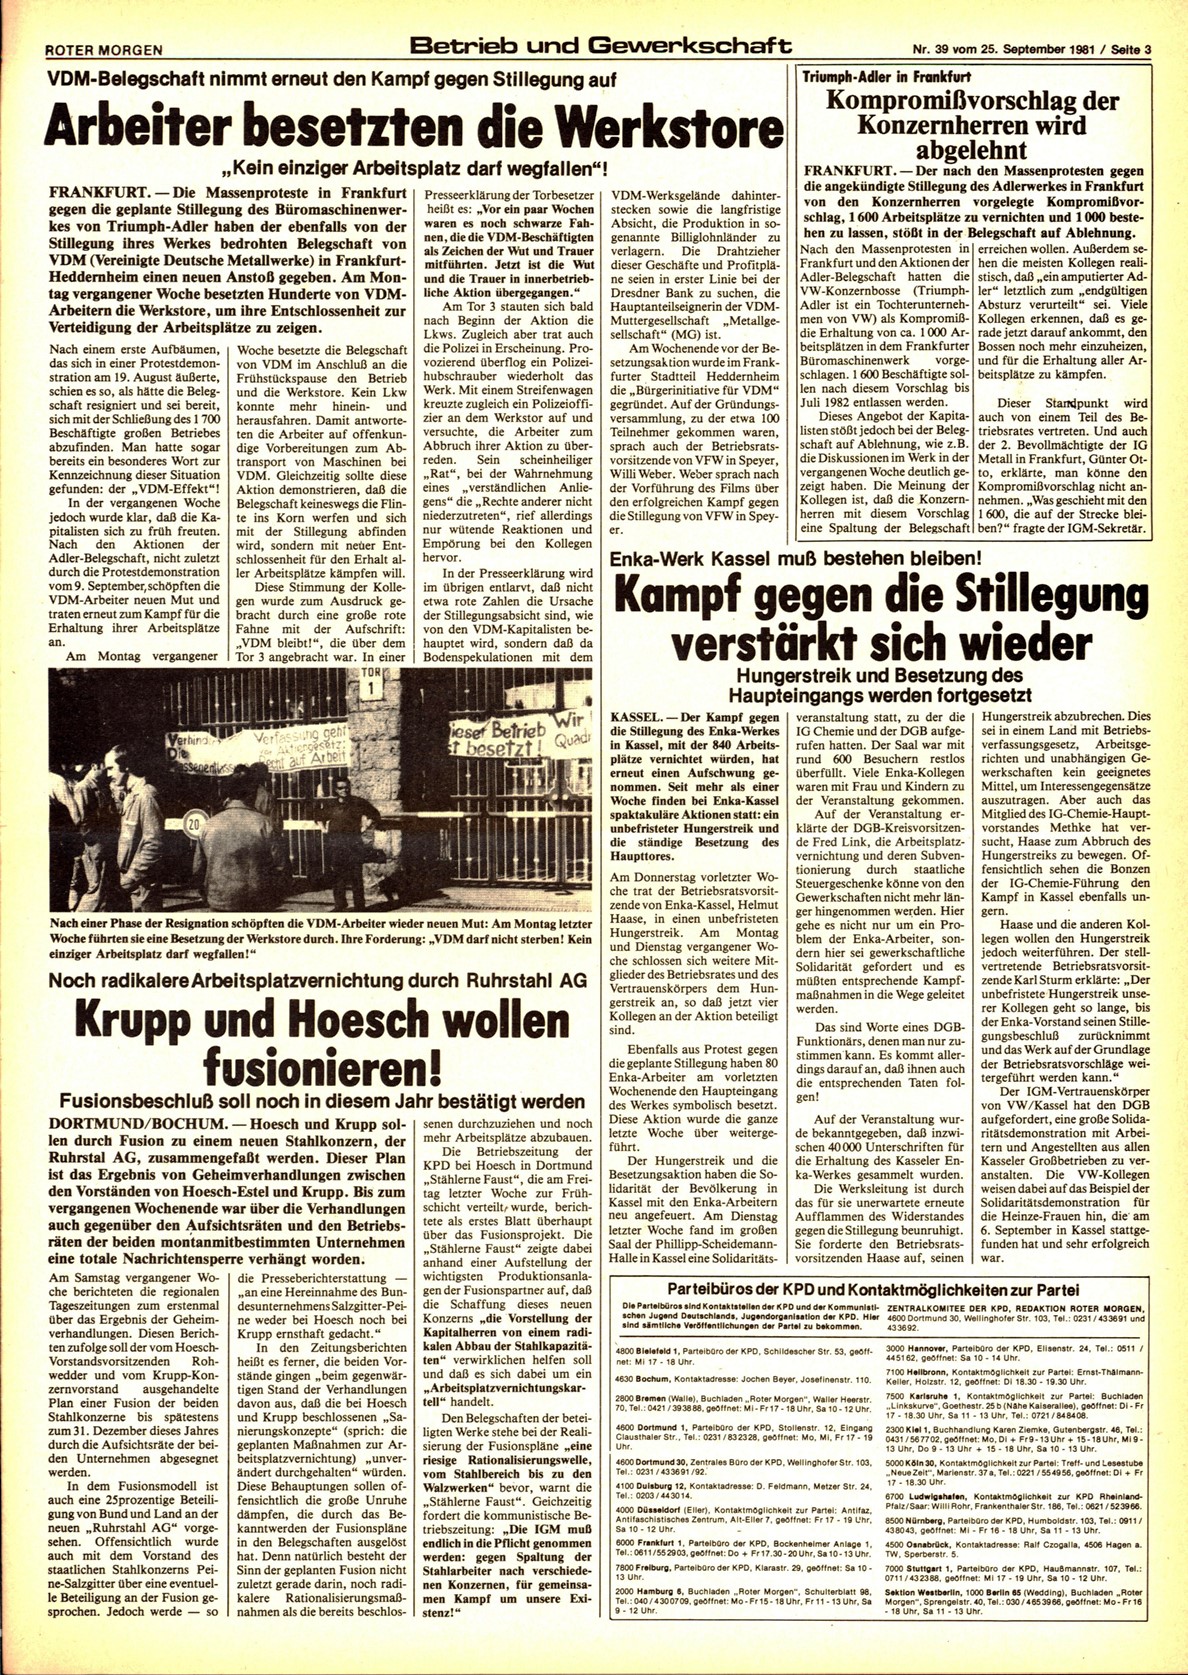 Roter Morgen, 15. Jg., 25. September 1981, Nr. 39, Seite 3